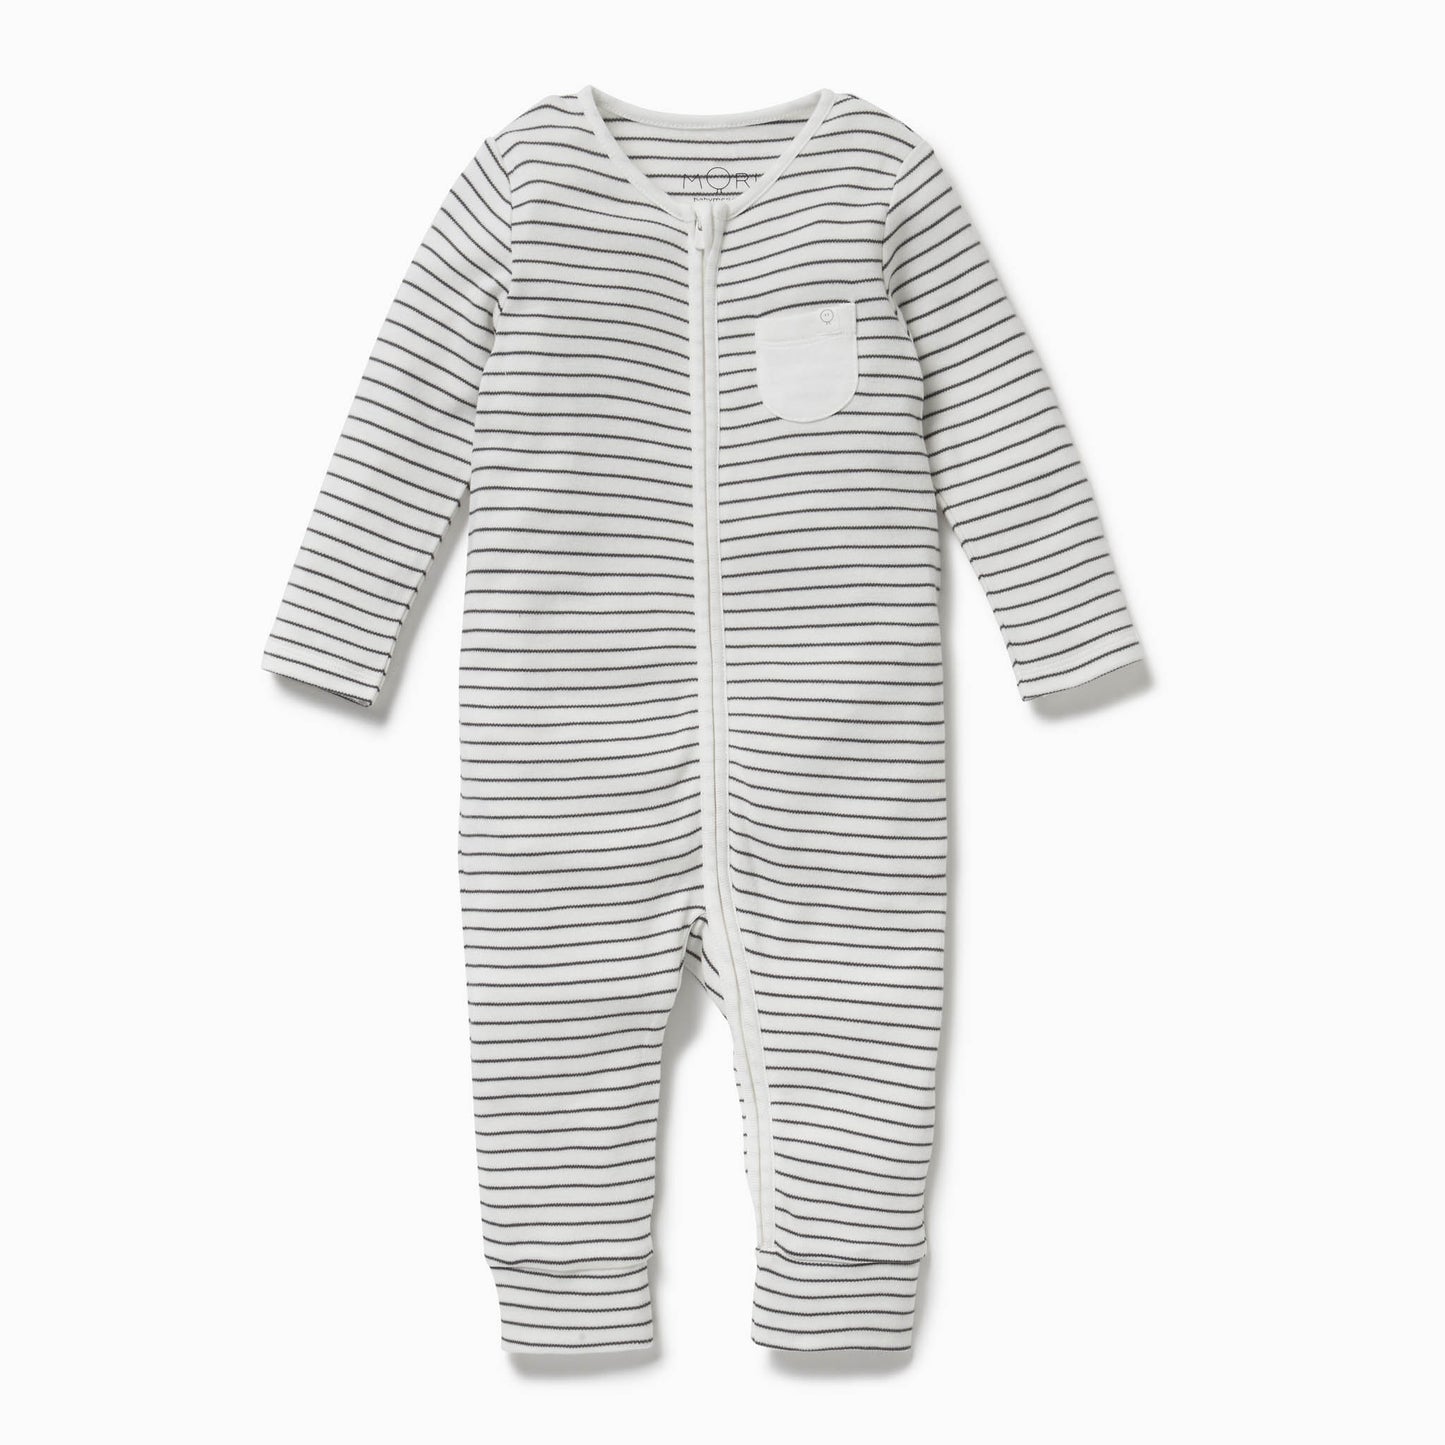 Grey stripe zip up sleepsuit with no feet